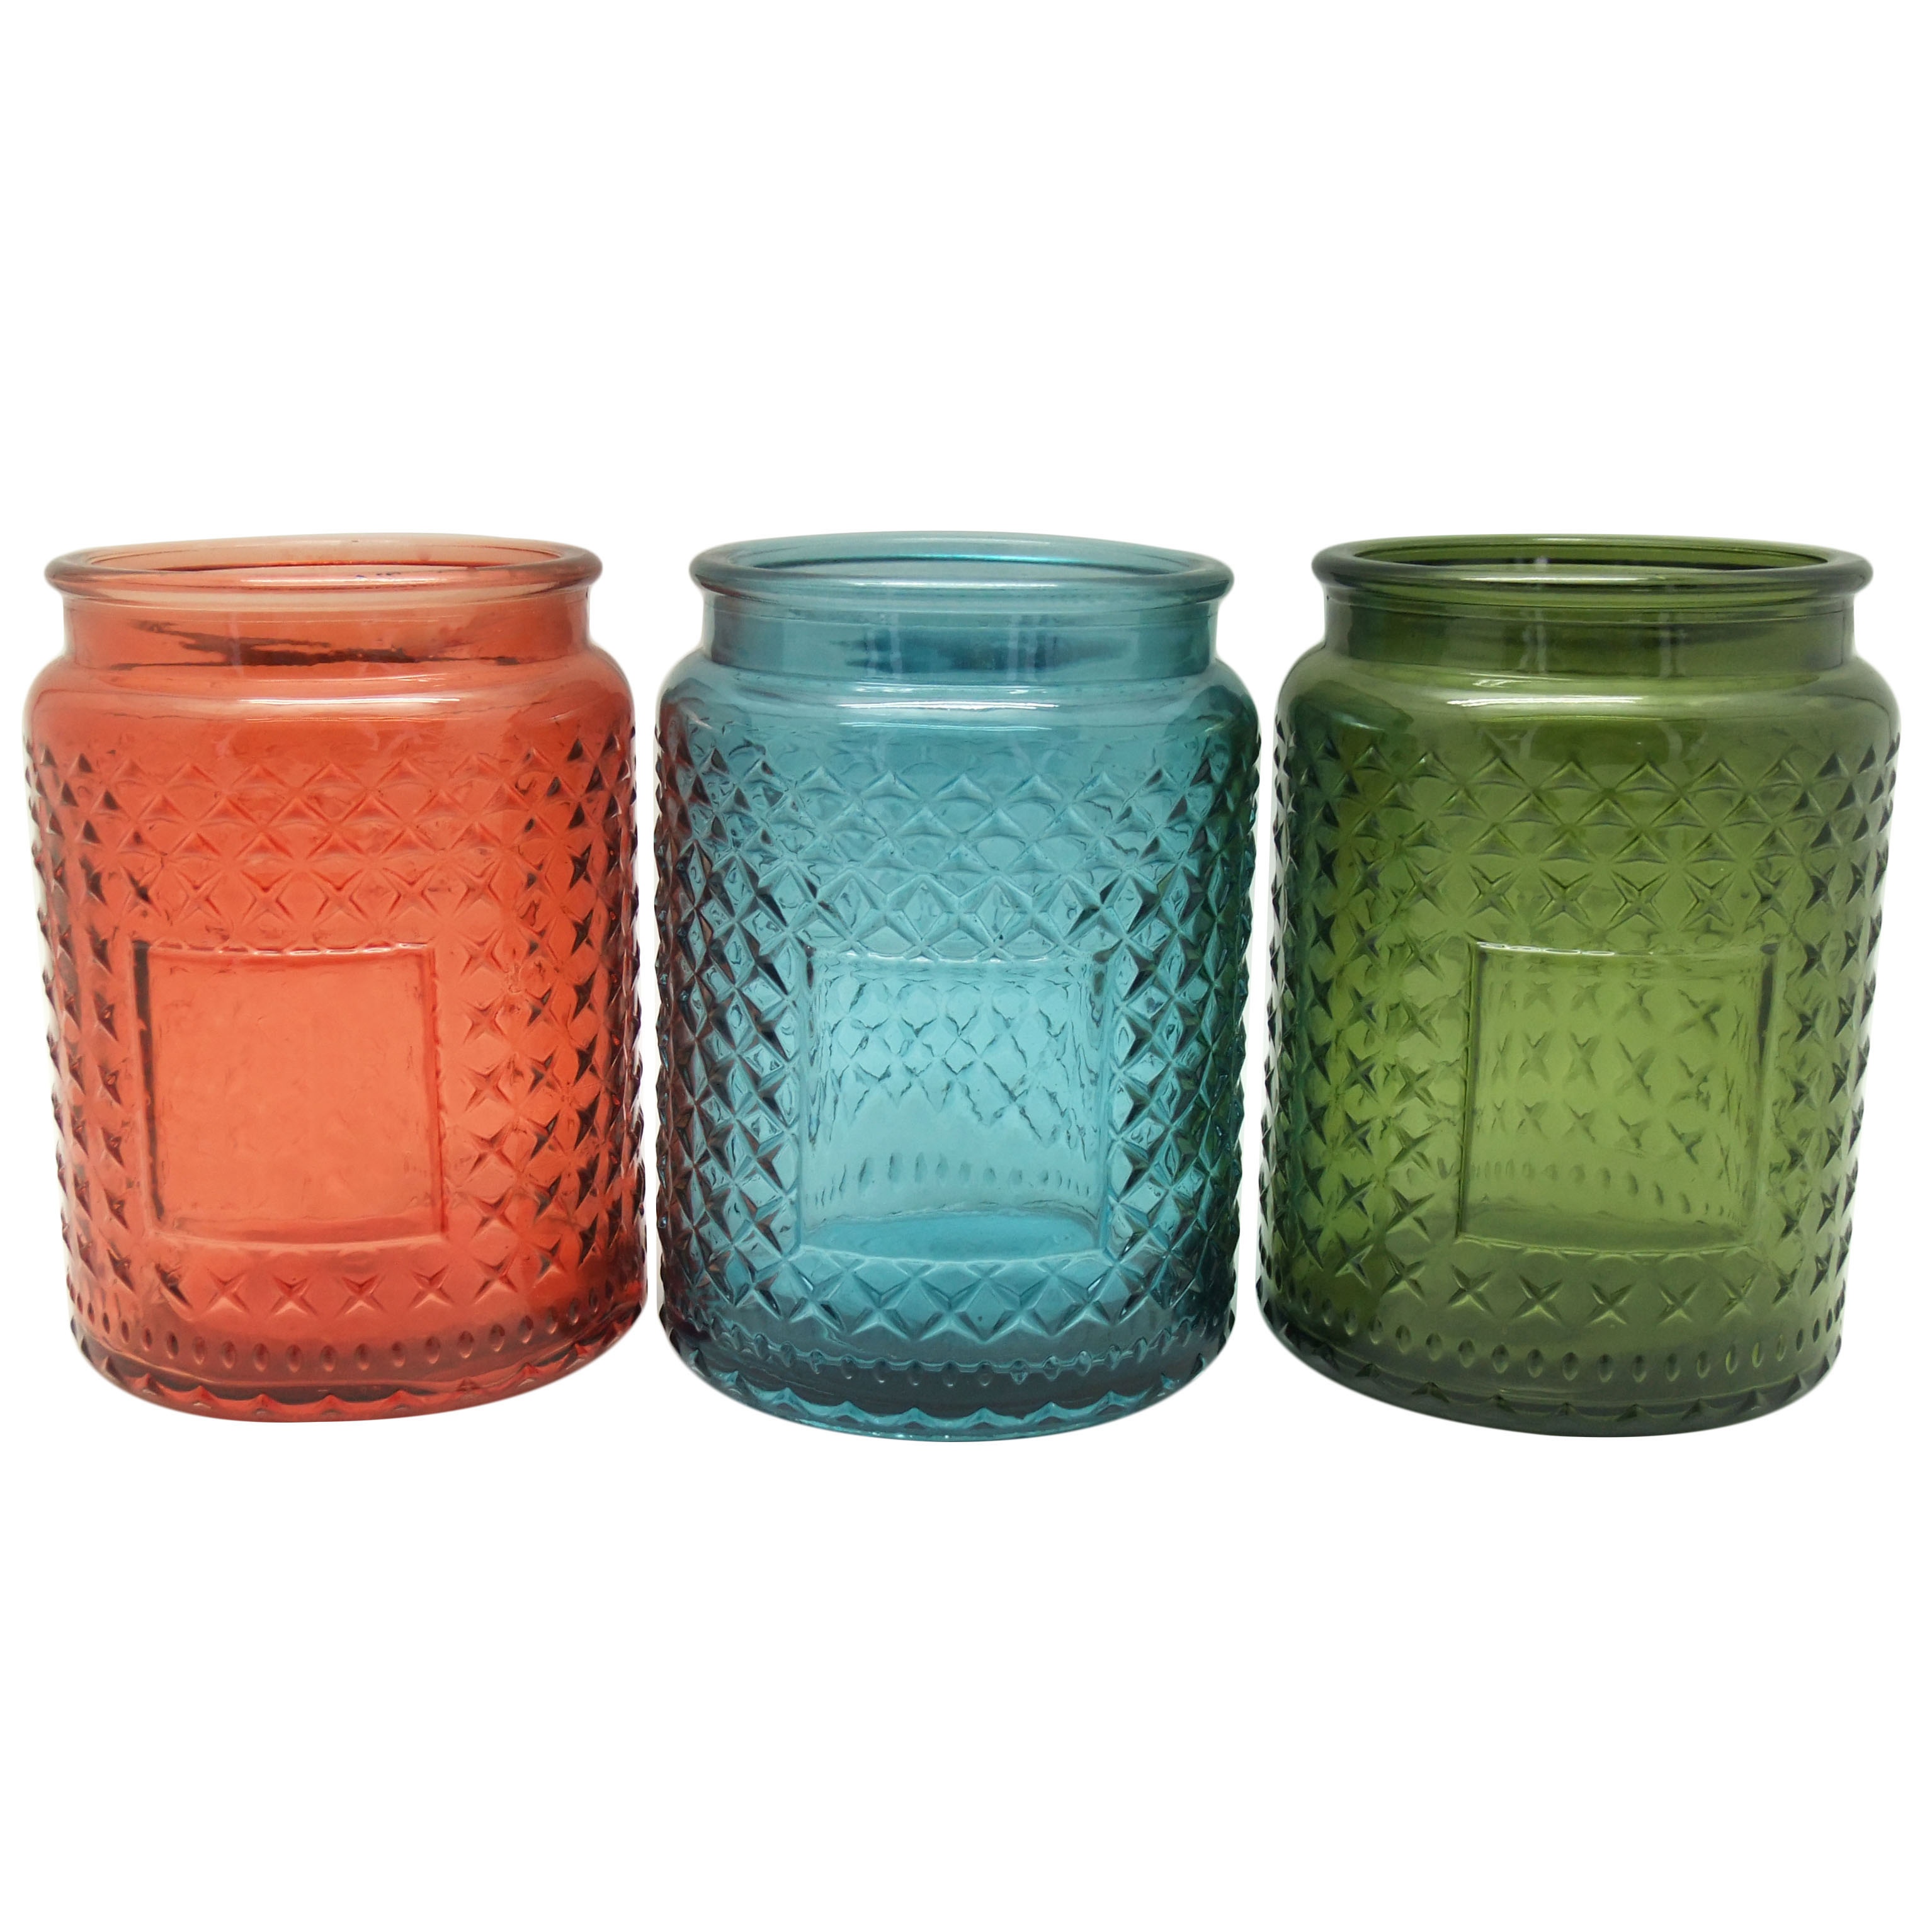 https://colorsglass.com/Uploads/products/2020-03-16/en-large-embossed-glass-jar-candle-17oz-unique.jpg